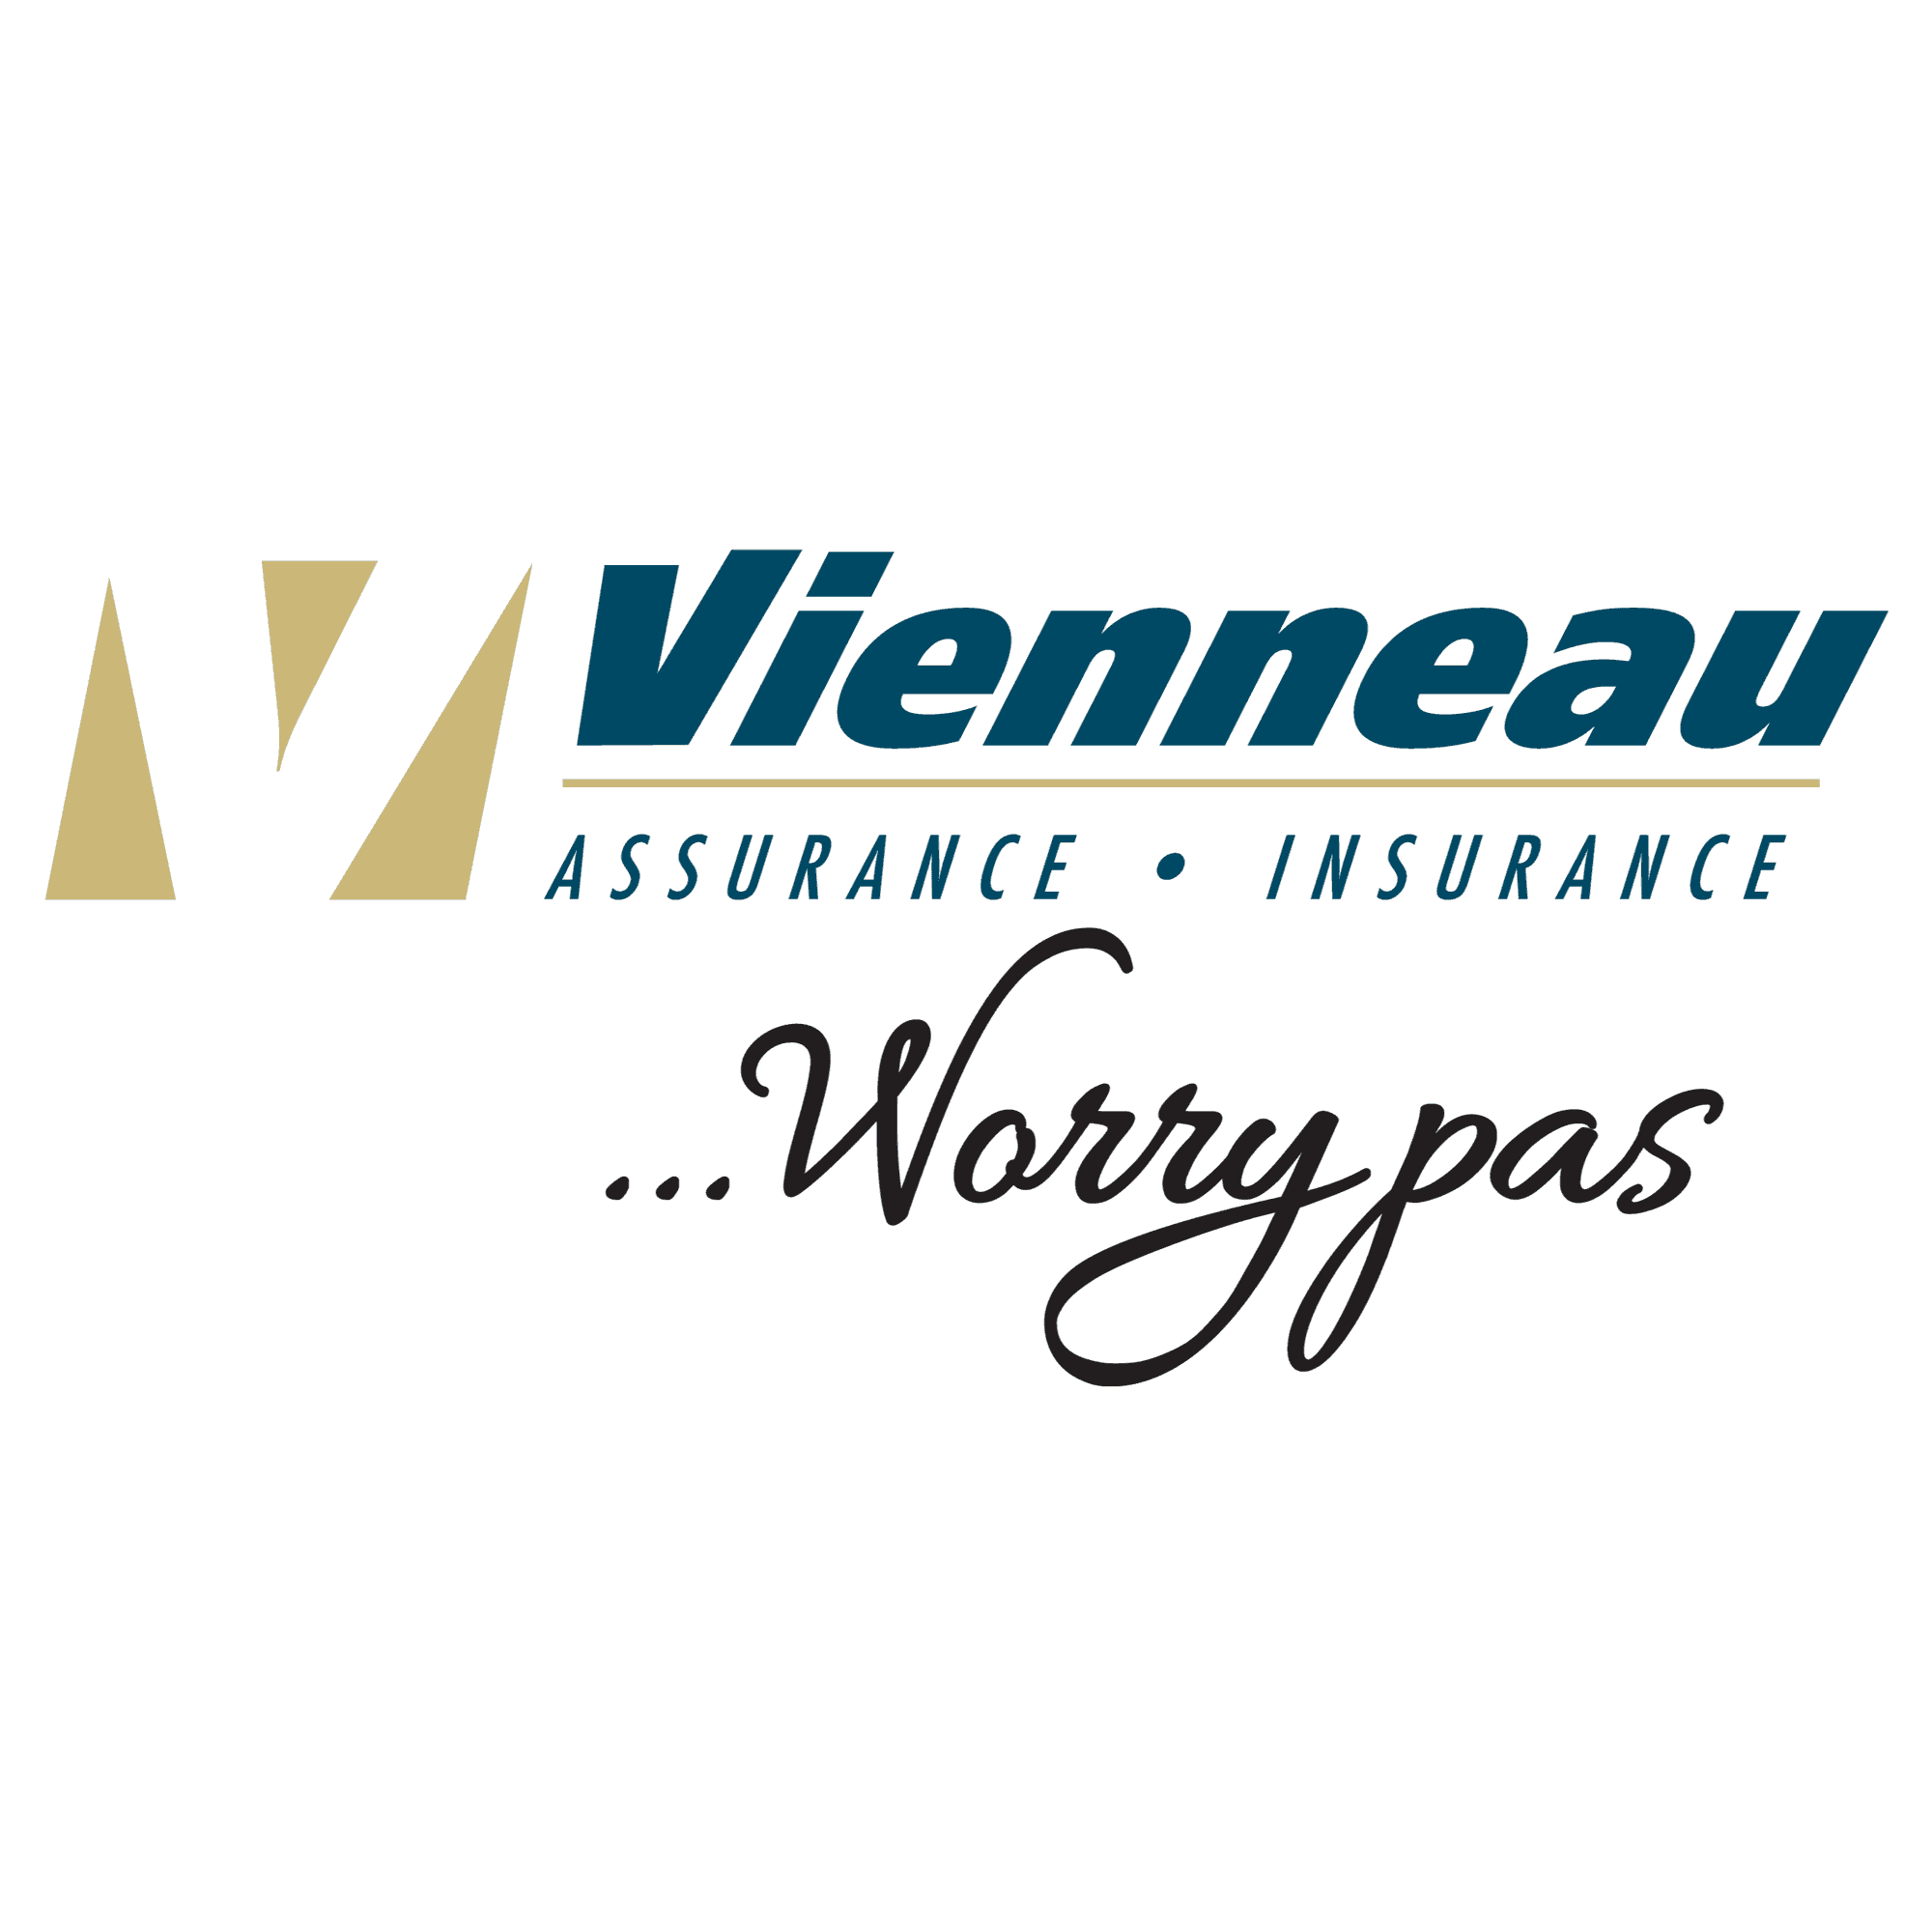 <p>Assurance Vienneau Insurance</p> logo